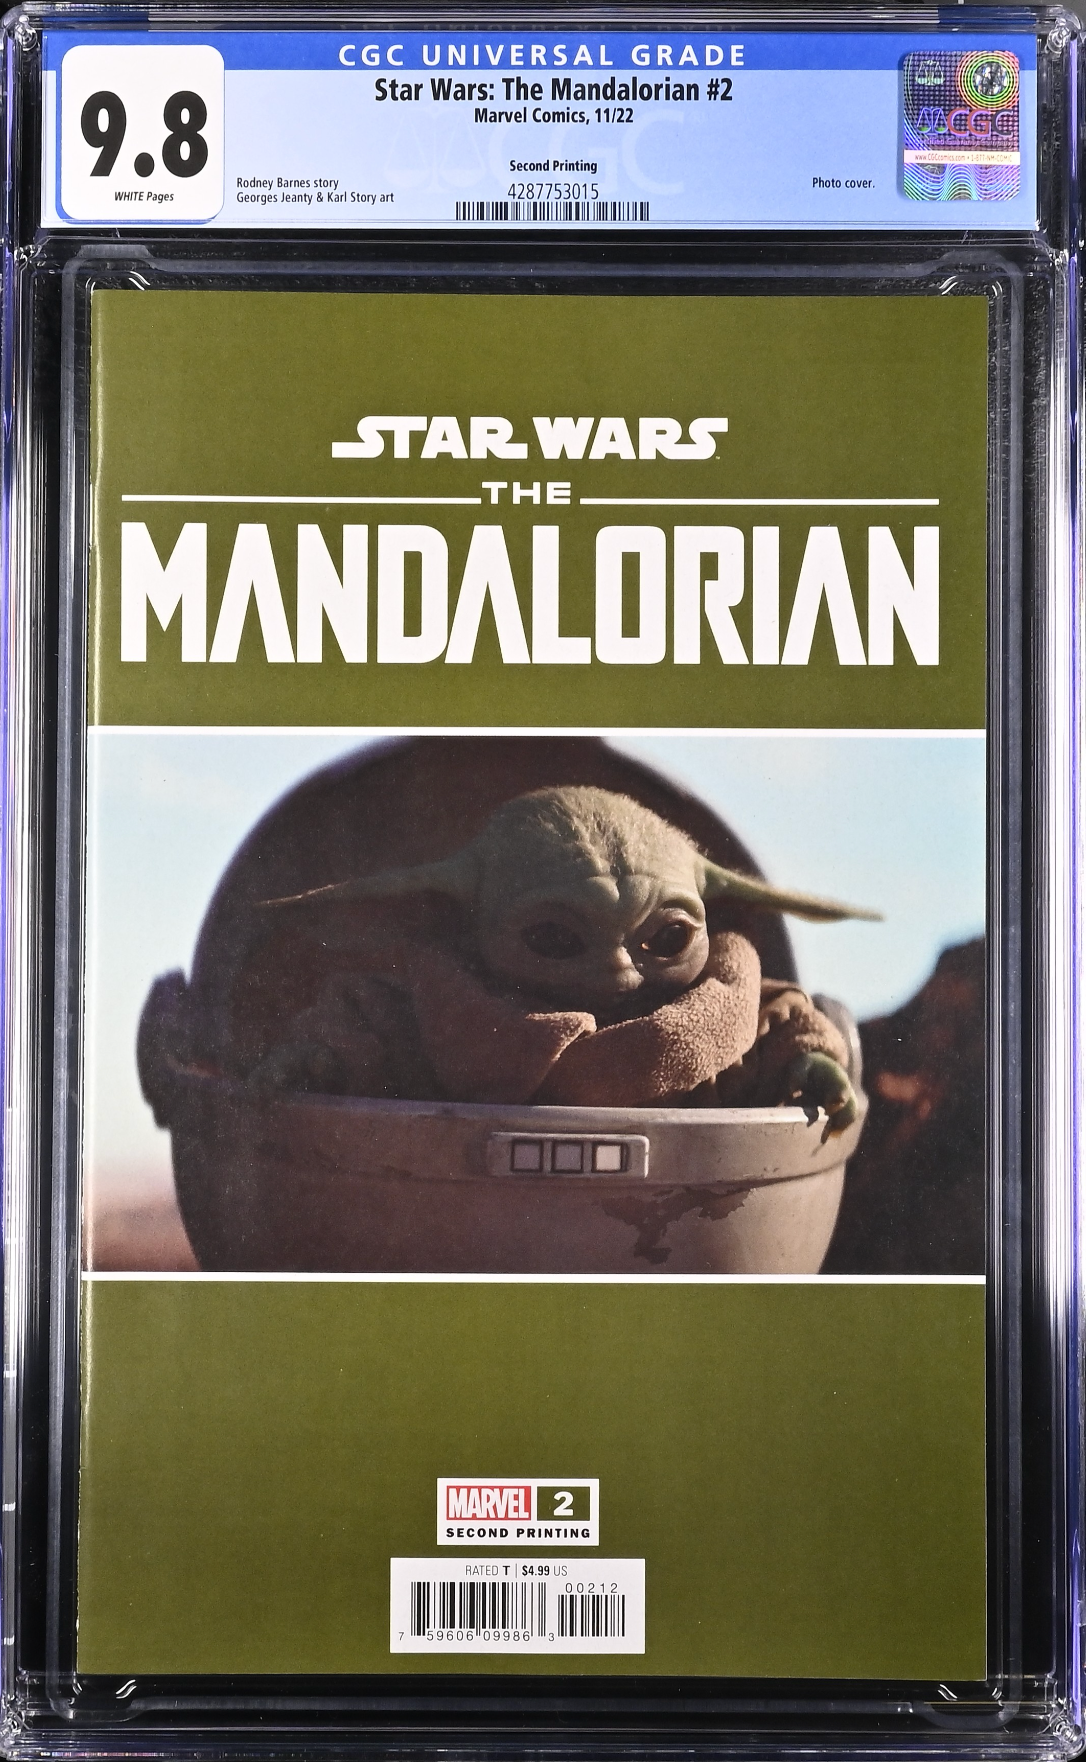 Star Wars: The Mandalorian #2 Second Printing CGC 9.8